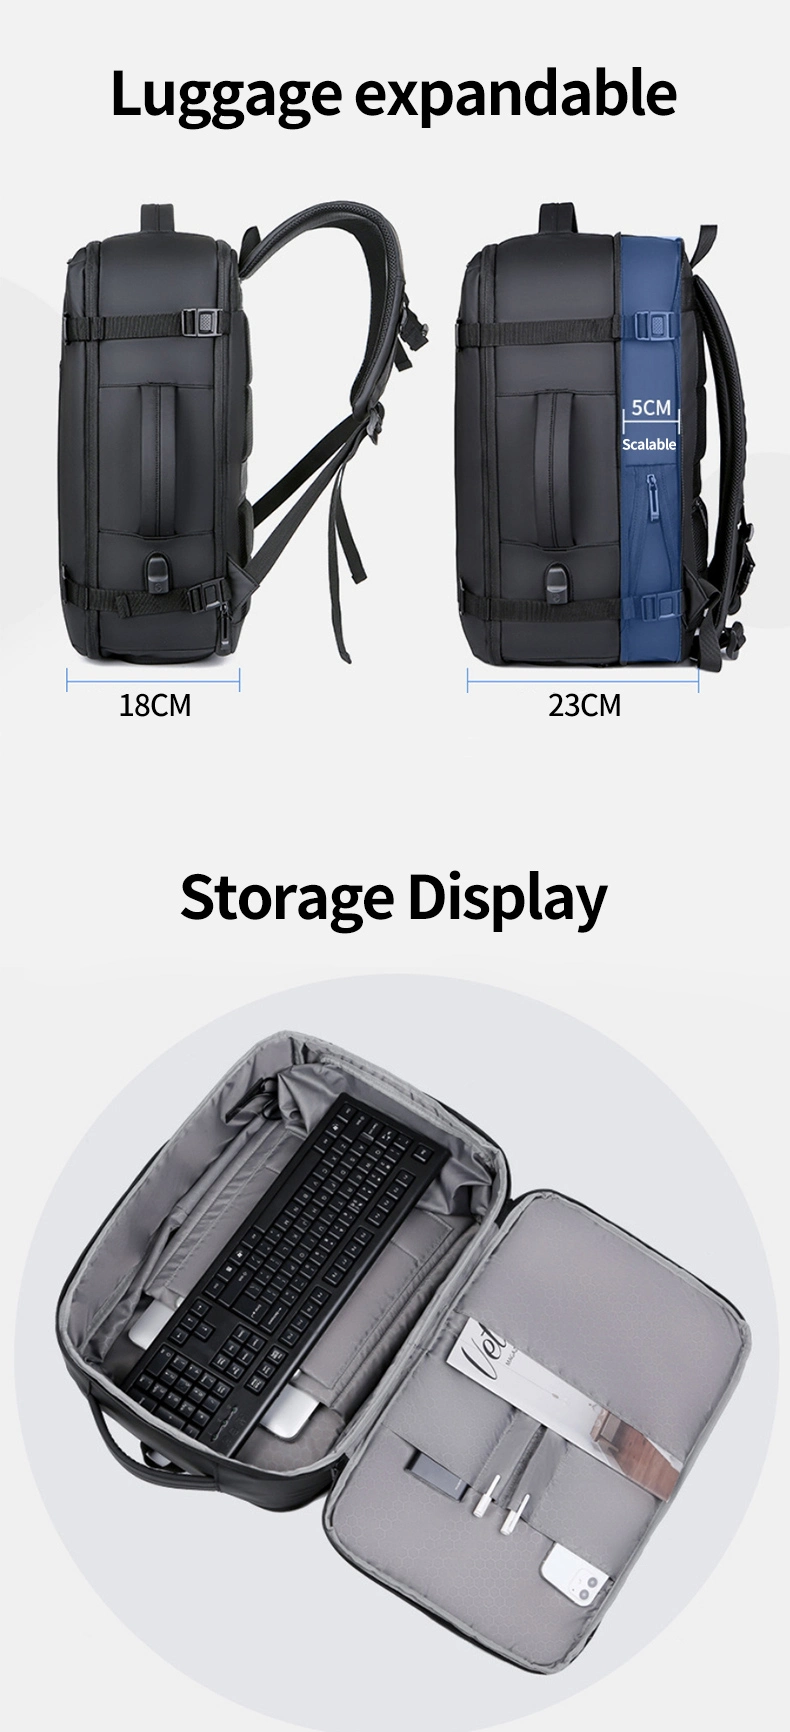 Large USB Charging 17.3 Laptop Waterproof Business Travel Backpacks Bag for Men